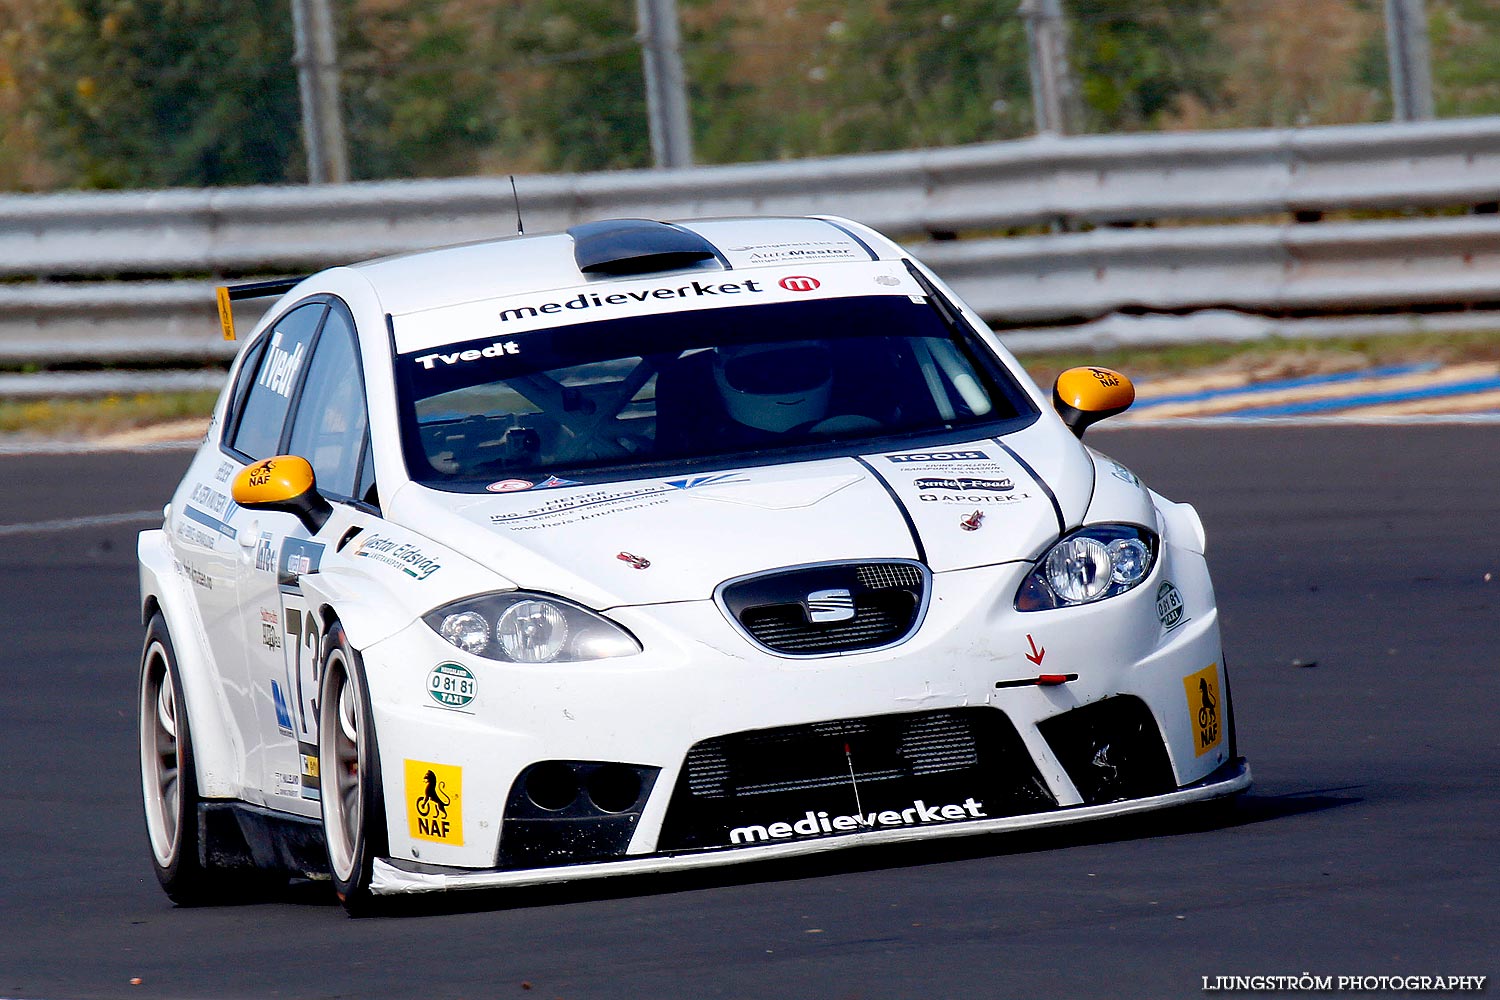 SSK Raceweek,mix,Kinnekulle Ring,Götene,Sverige,Motorsport,,2014,90406